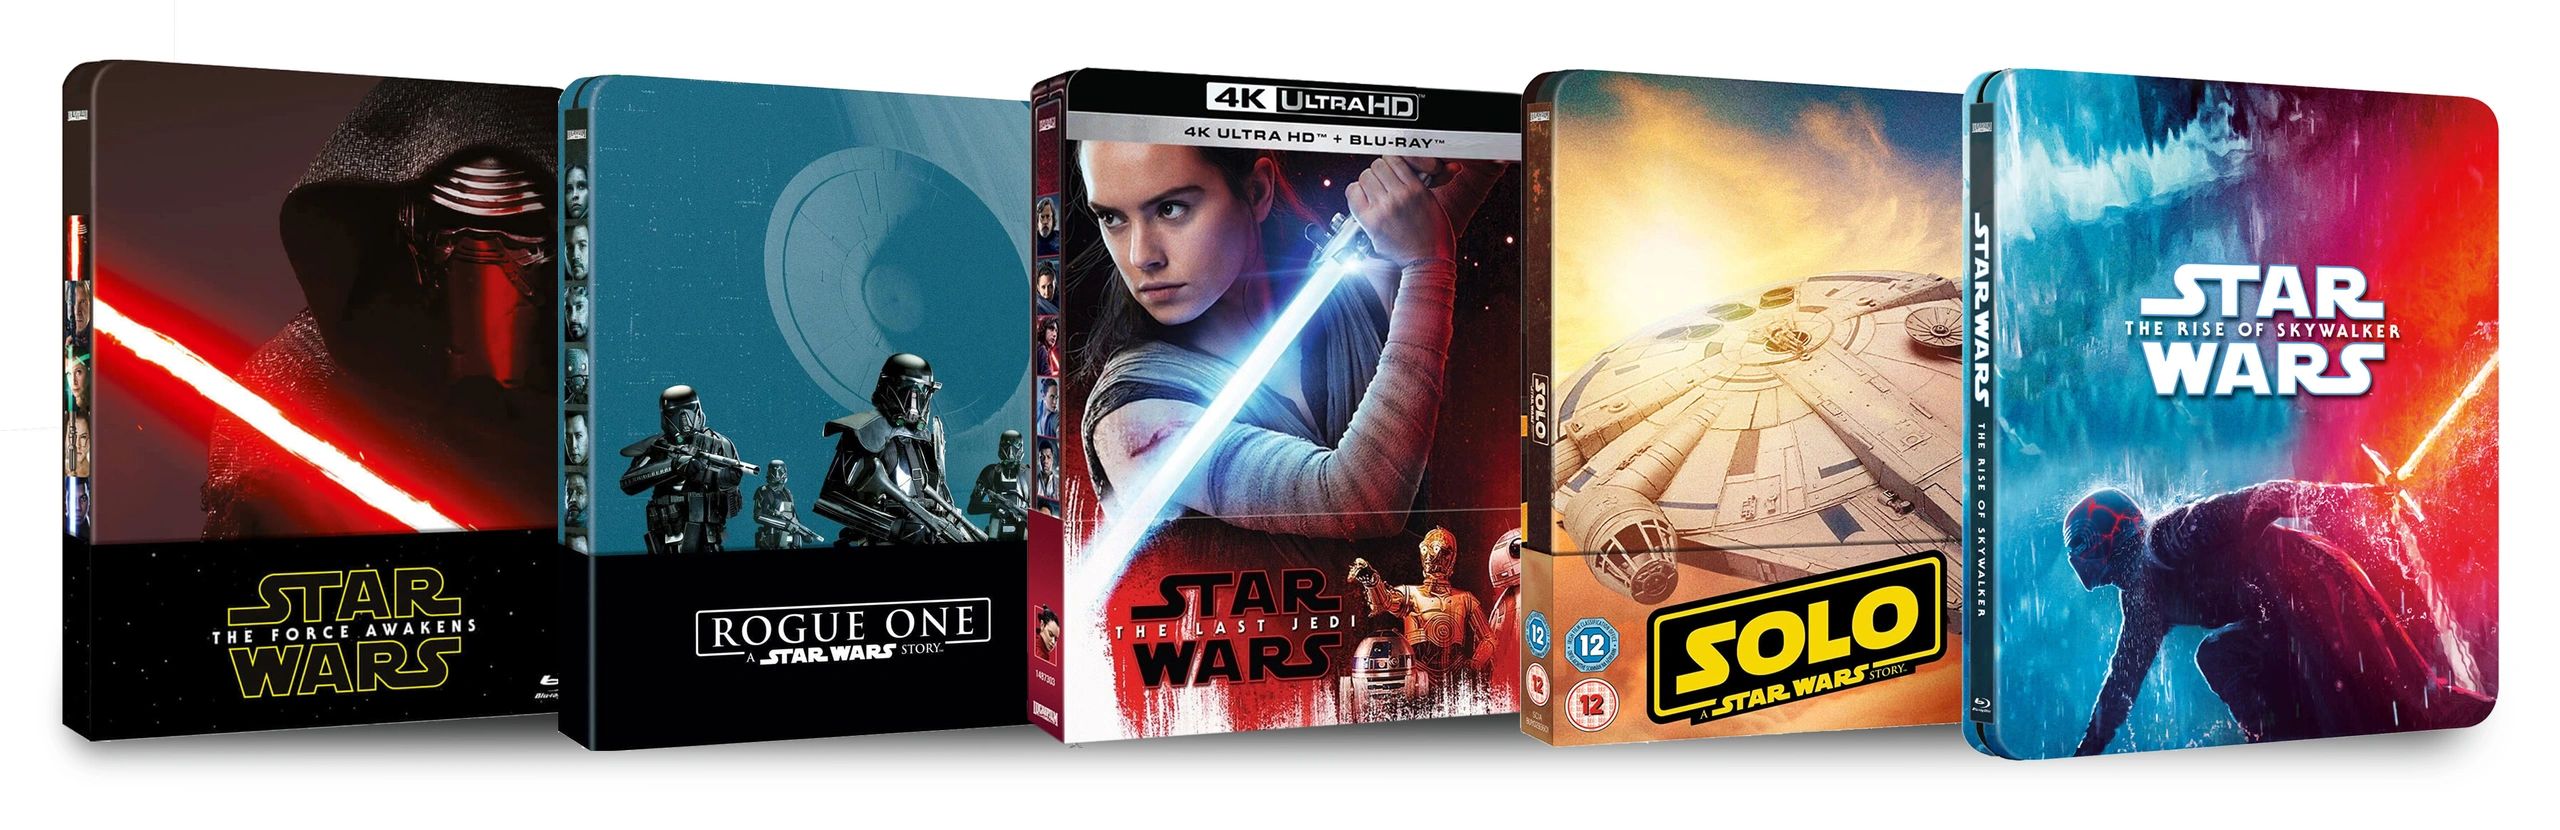 The Mandalorian Season 2 4K UHD Blu-ray Steelbook Available from Monday in  UK & Europe - Jedi News